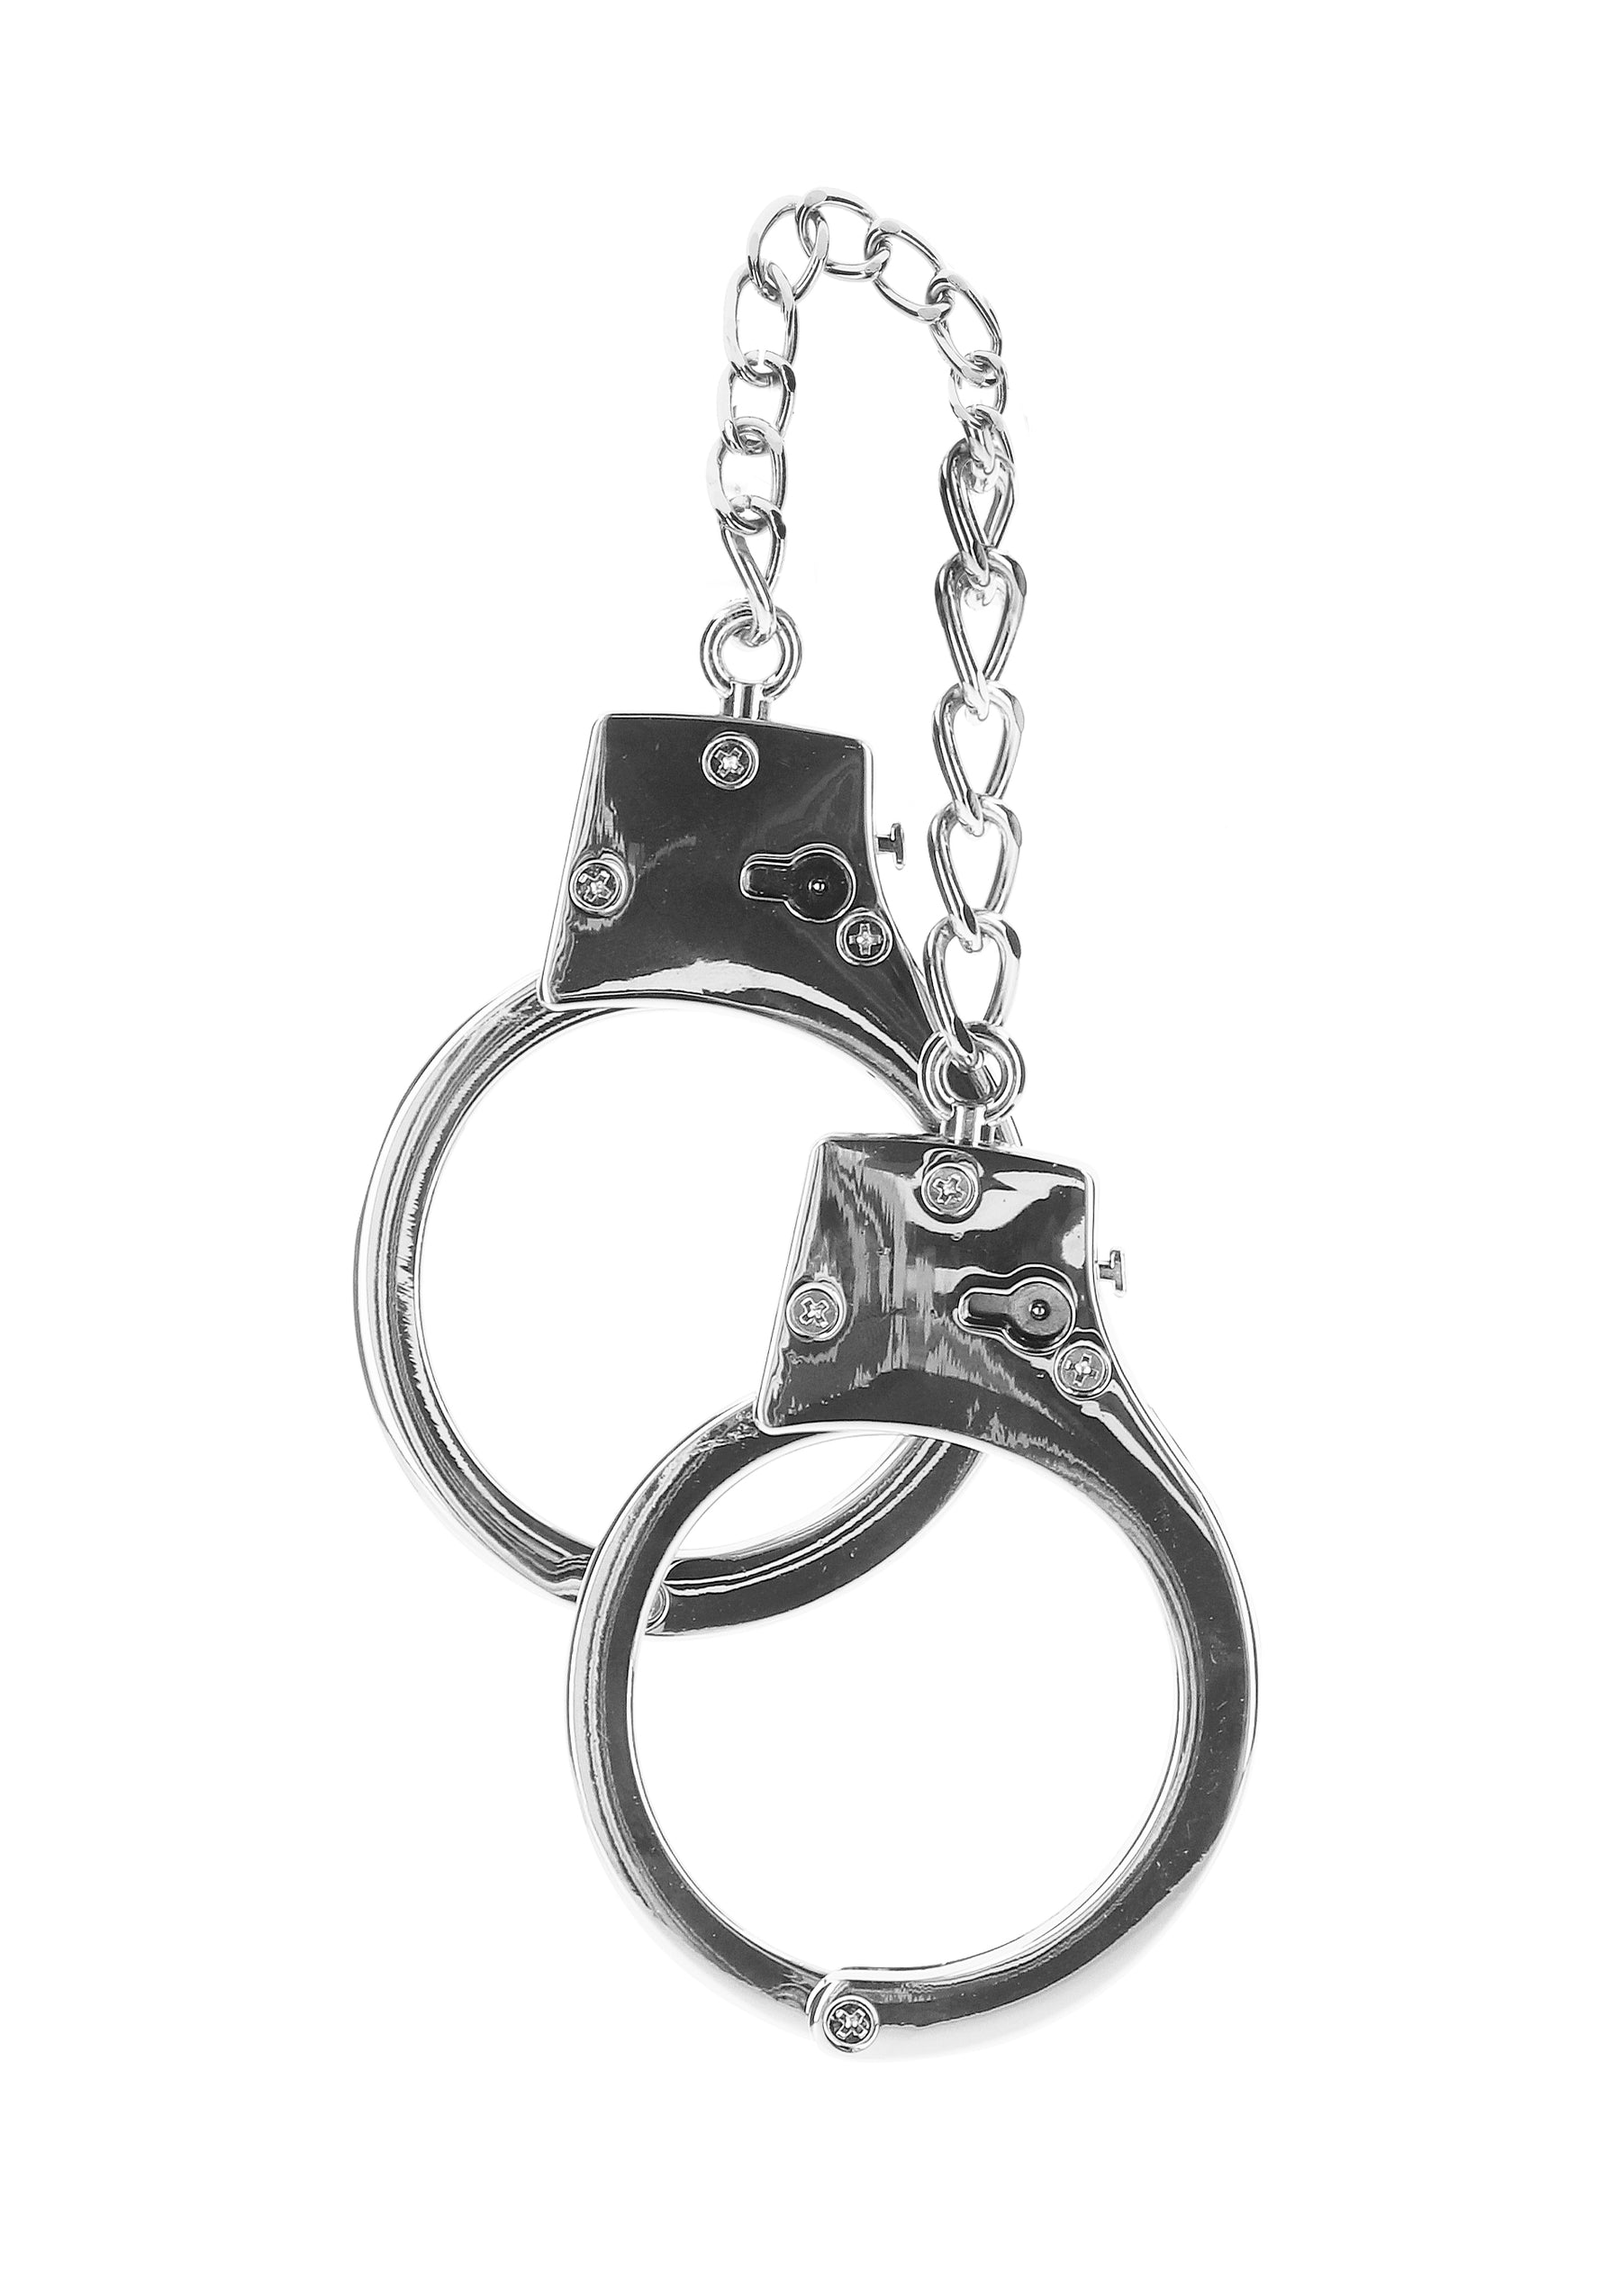 Silver Plated BDSM Handcuffs